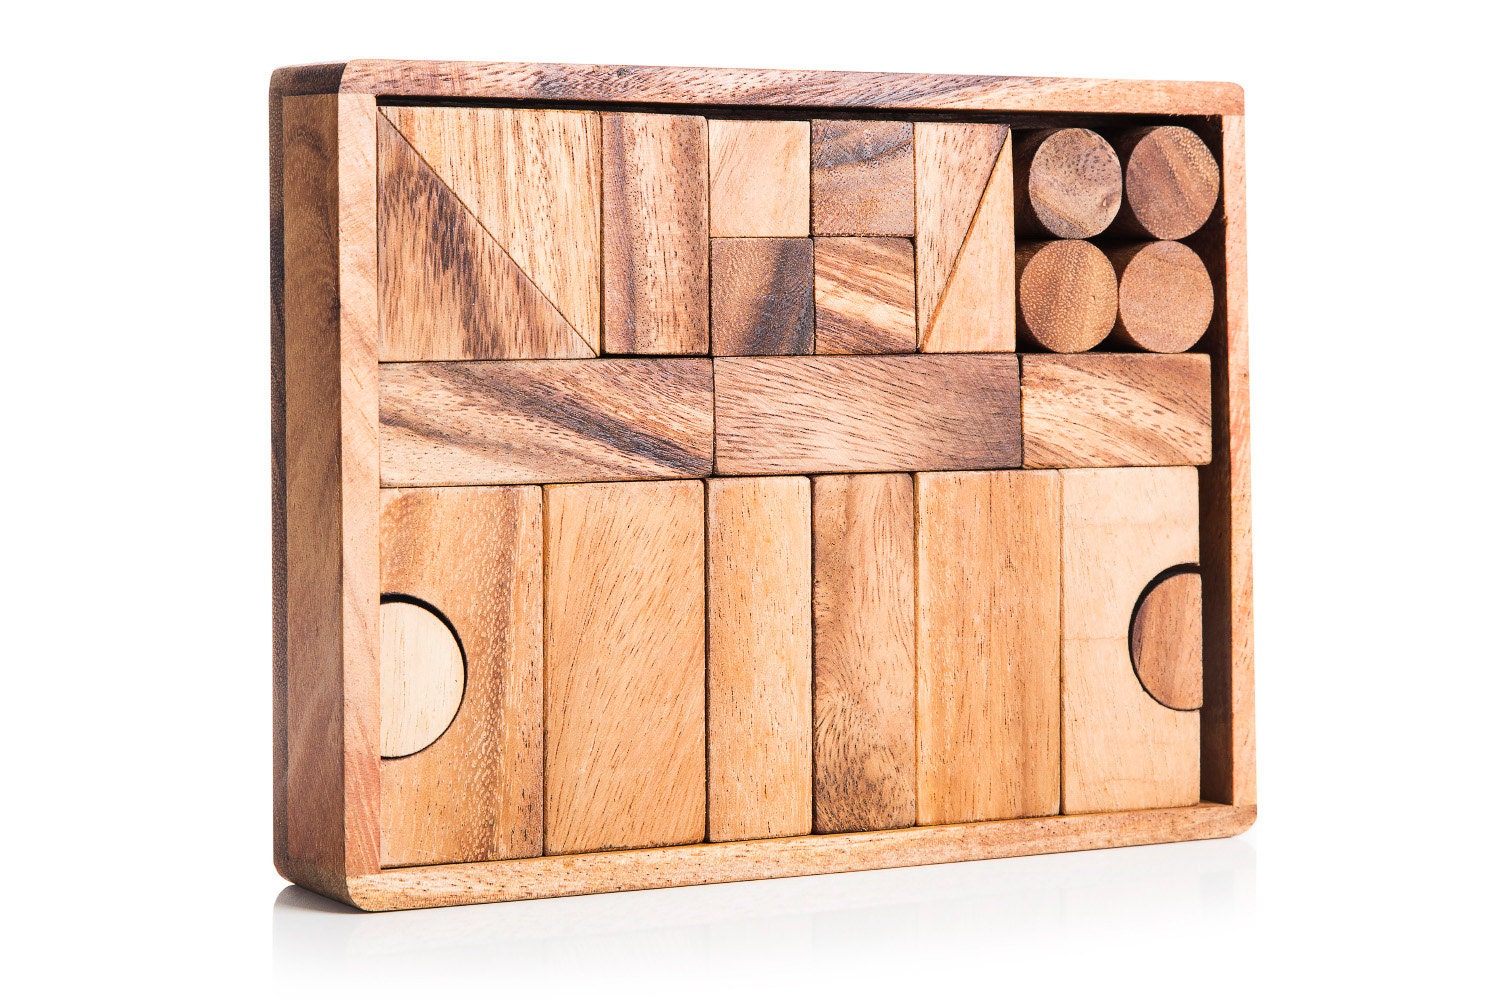 SALE Handmade Wooden Blocks, Eco Friendly Toys, Children Wooden